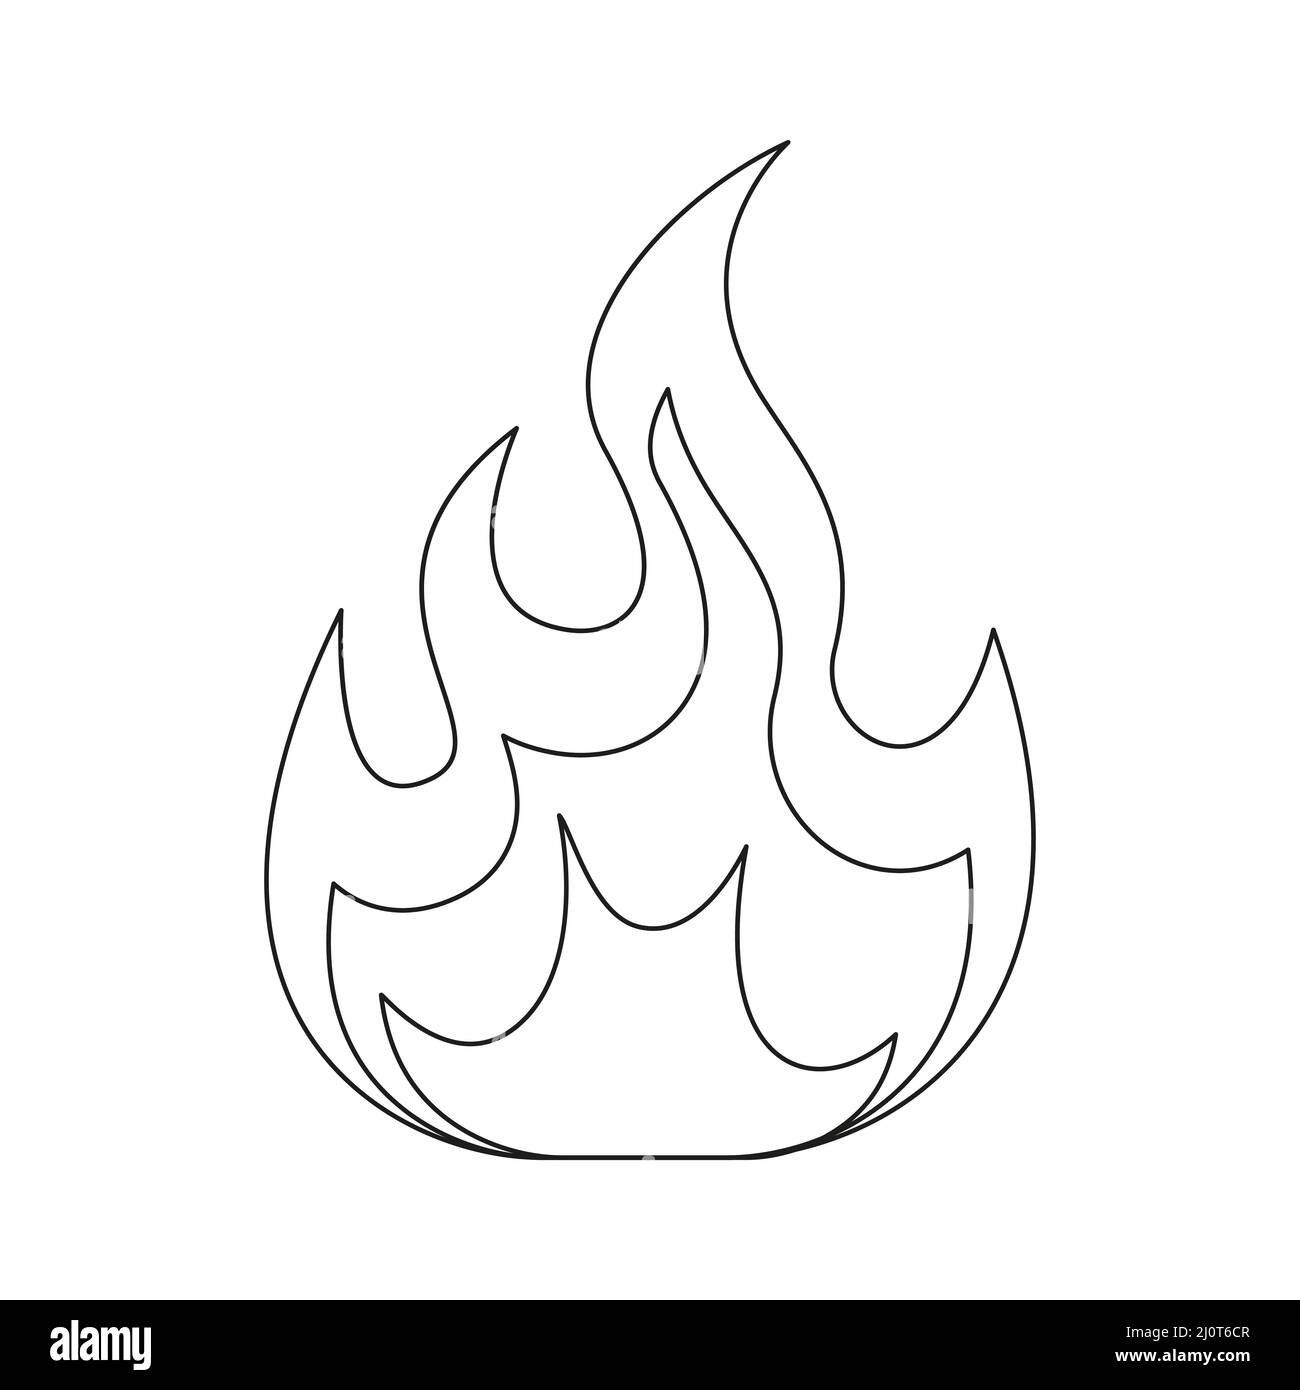 Fire line symbol. Fire flame outline shape. Warning linear sign